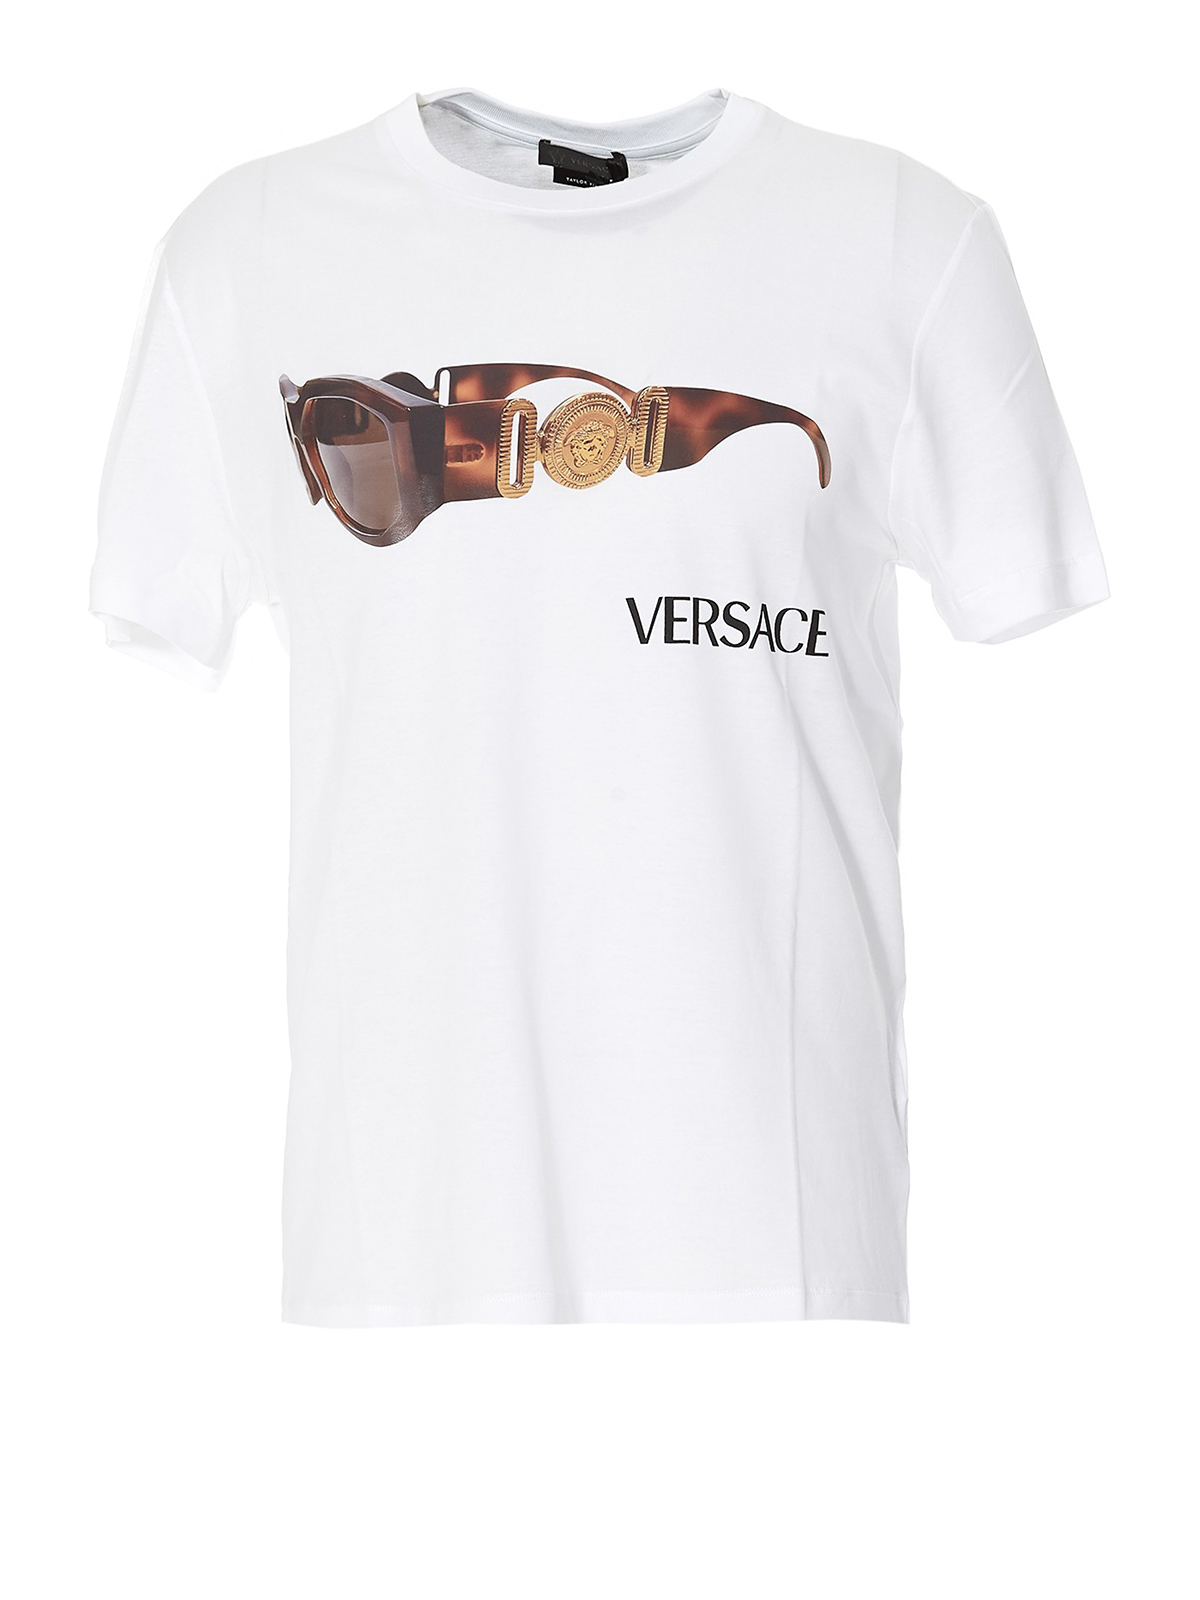 biggie versace shirt